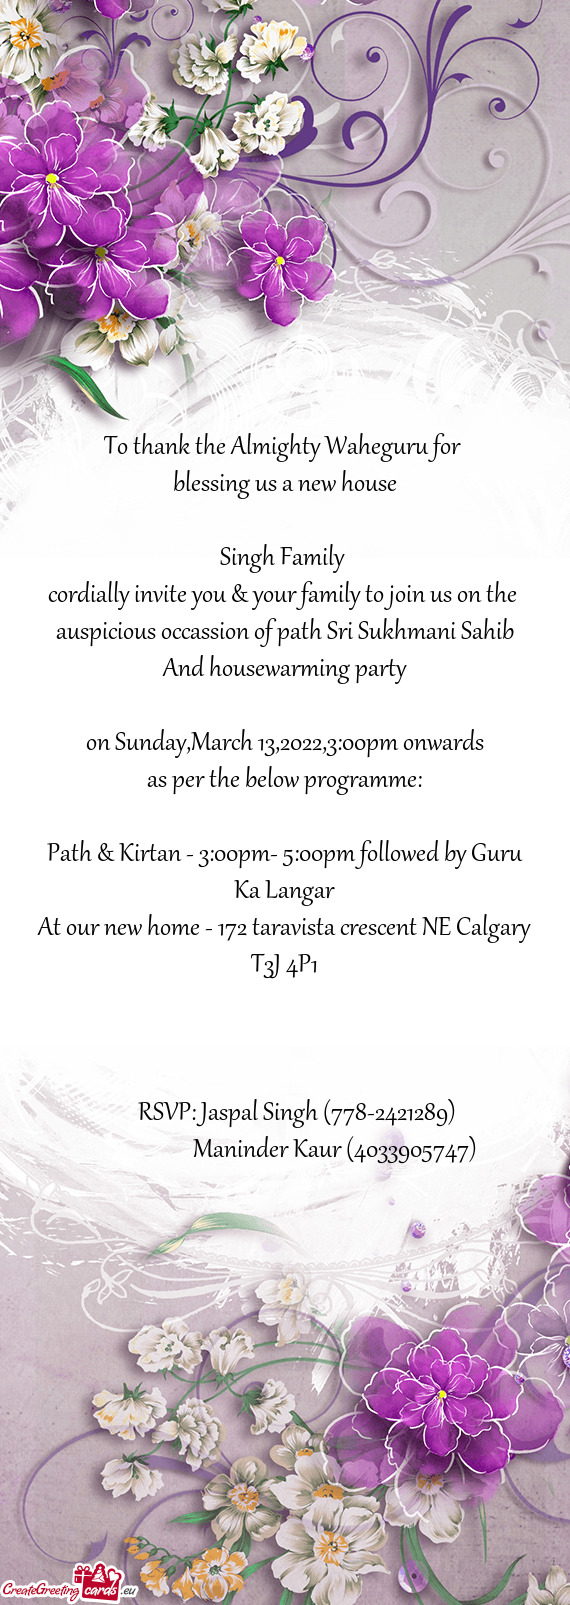 Auspicious occassion of path Sri Sukhmani Sahib